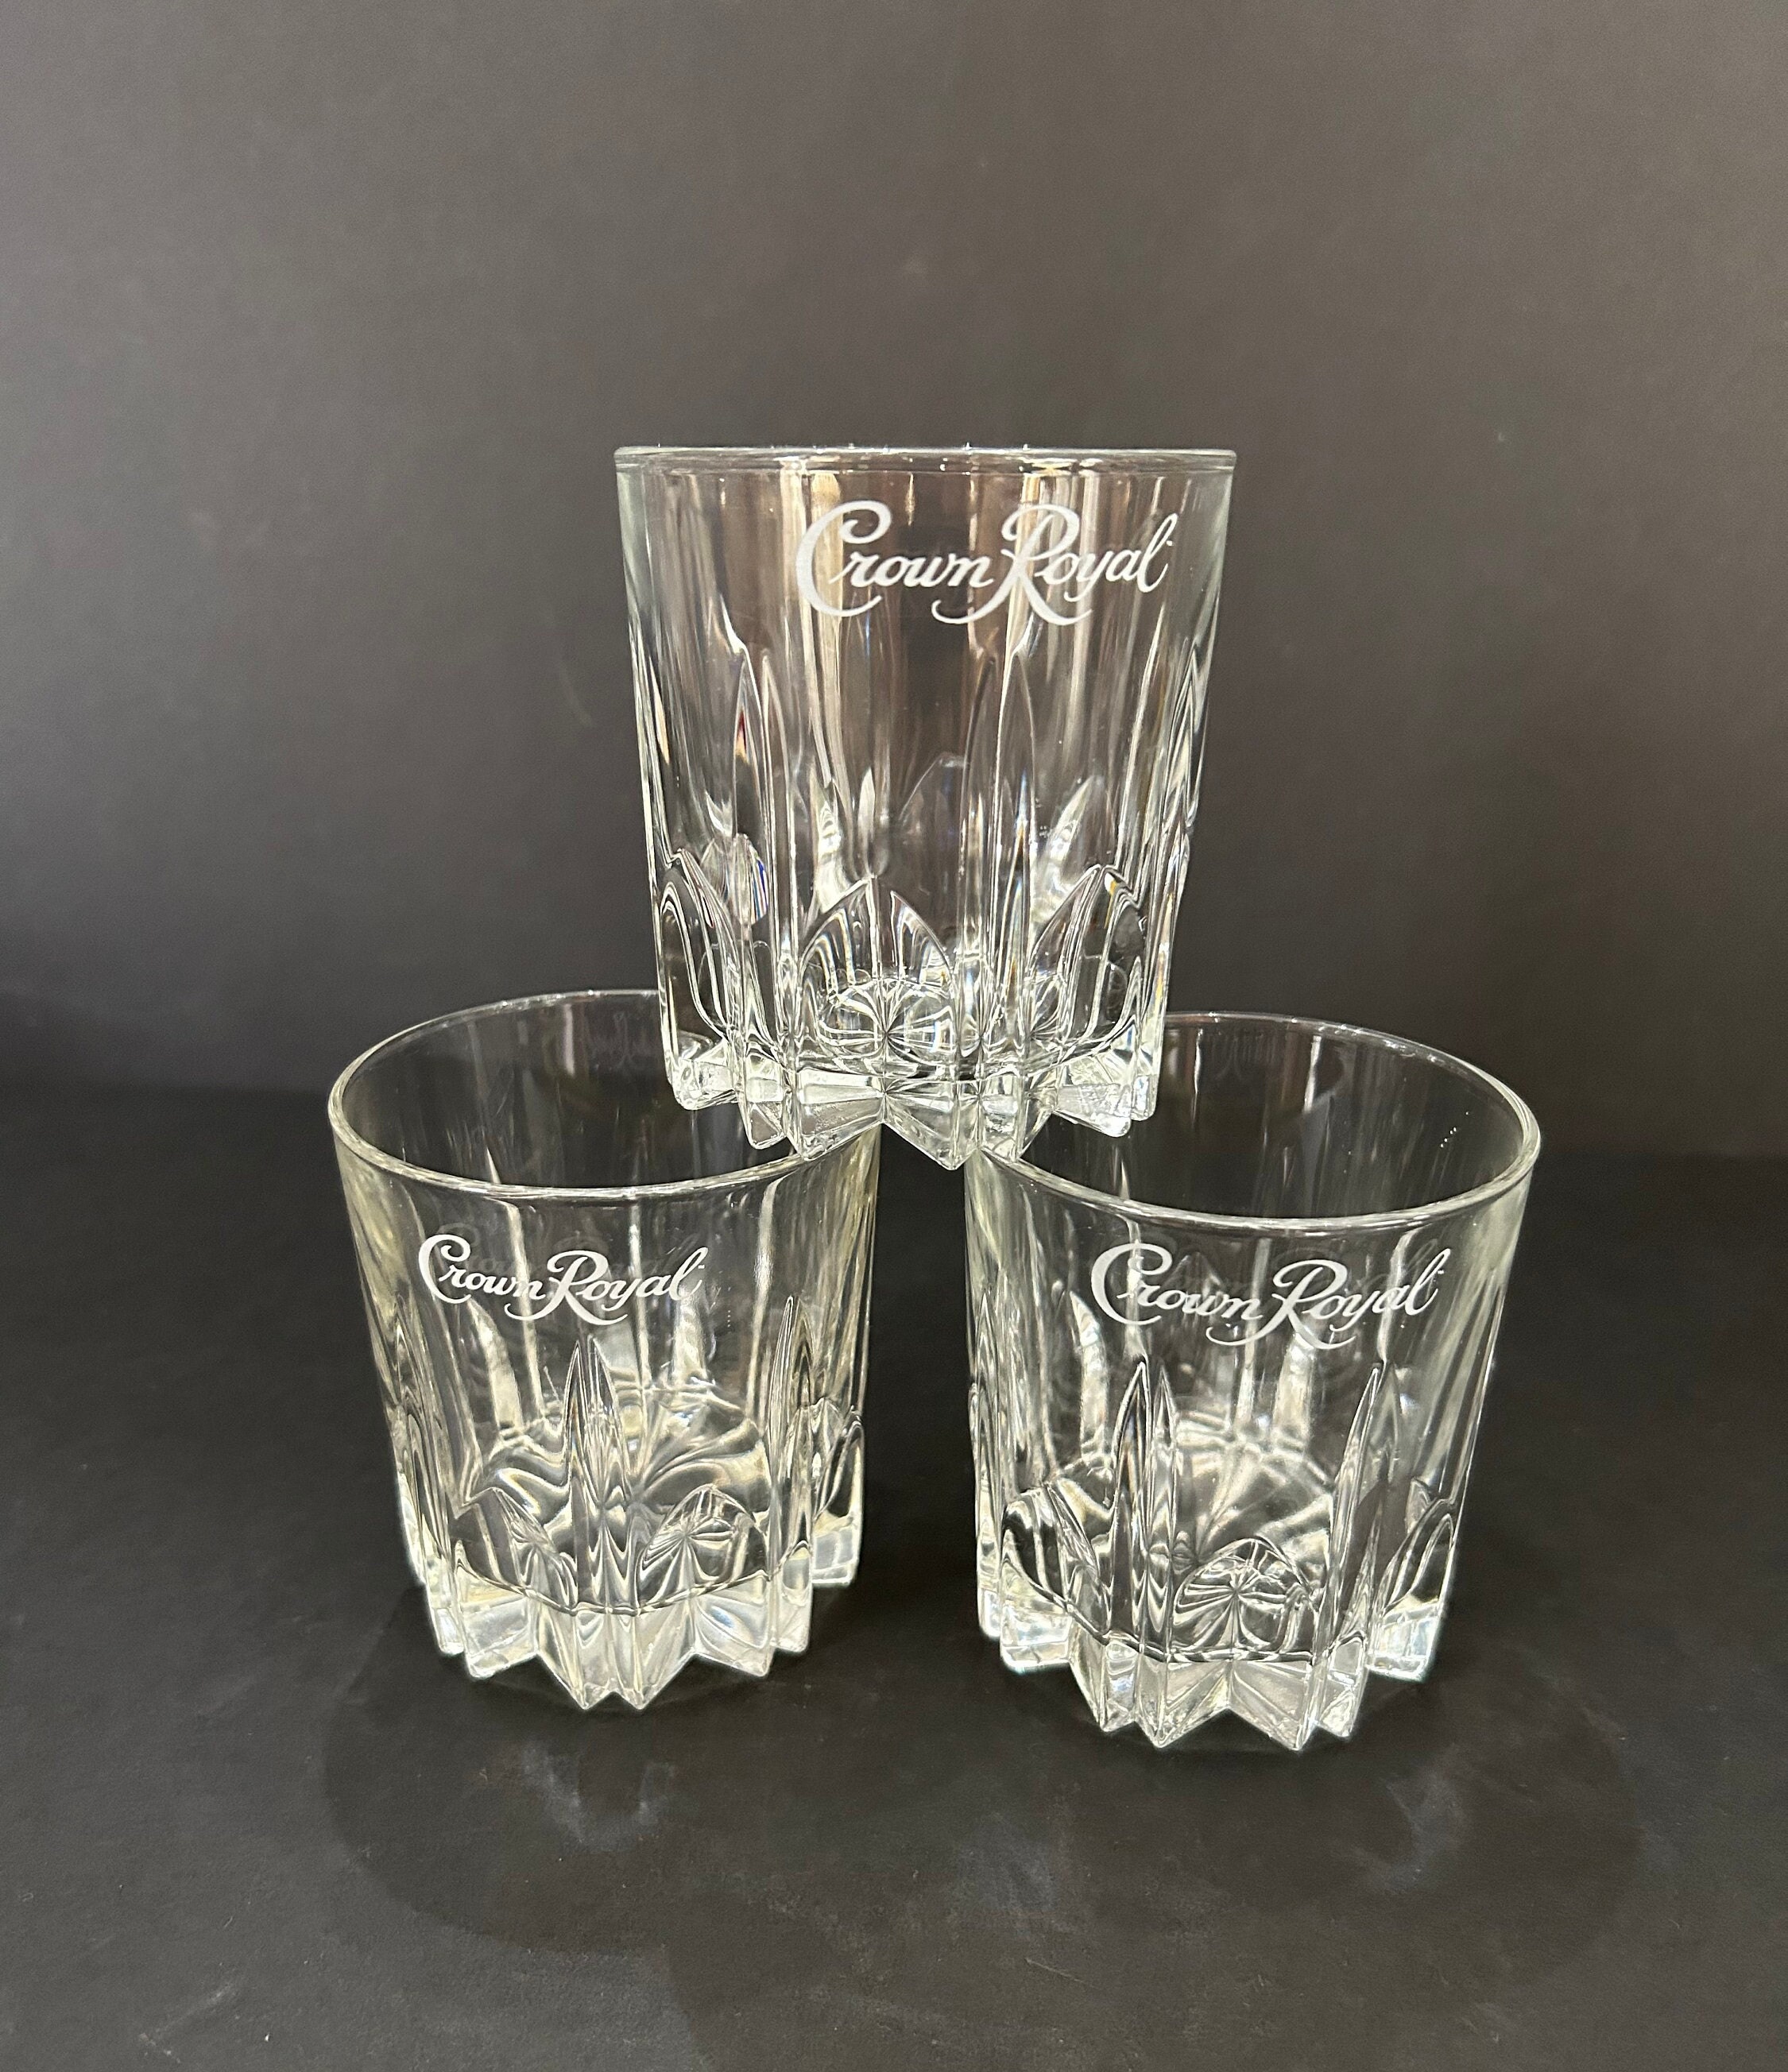 CROWN ROYAL WHISKEY GLASS GIFT SET W/4 GLASSES, 8 WHISKEY STONES